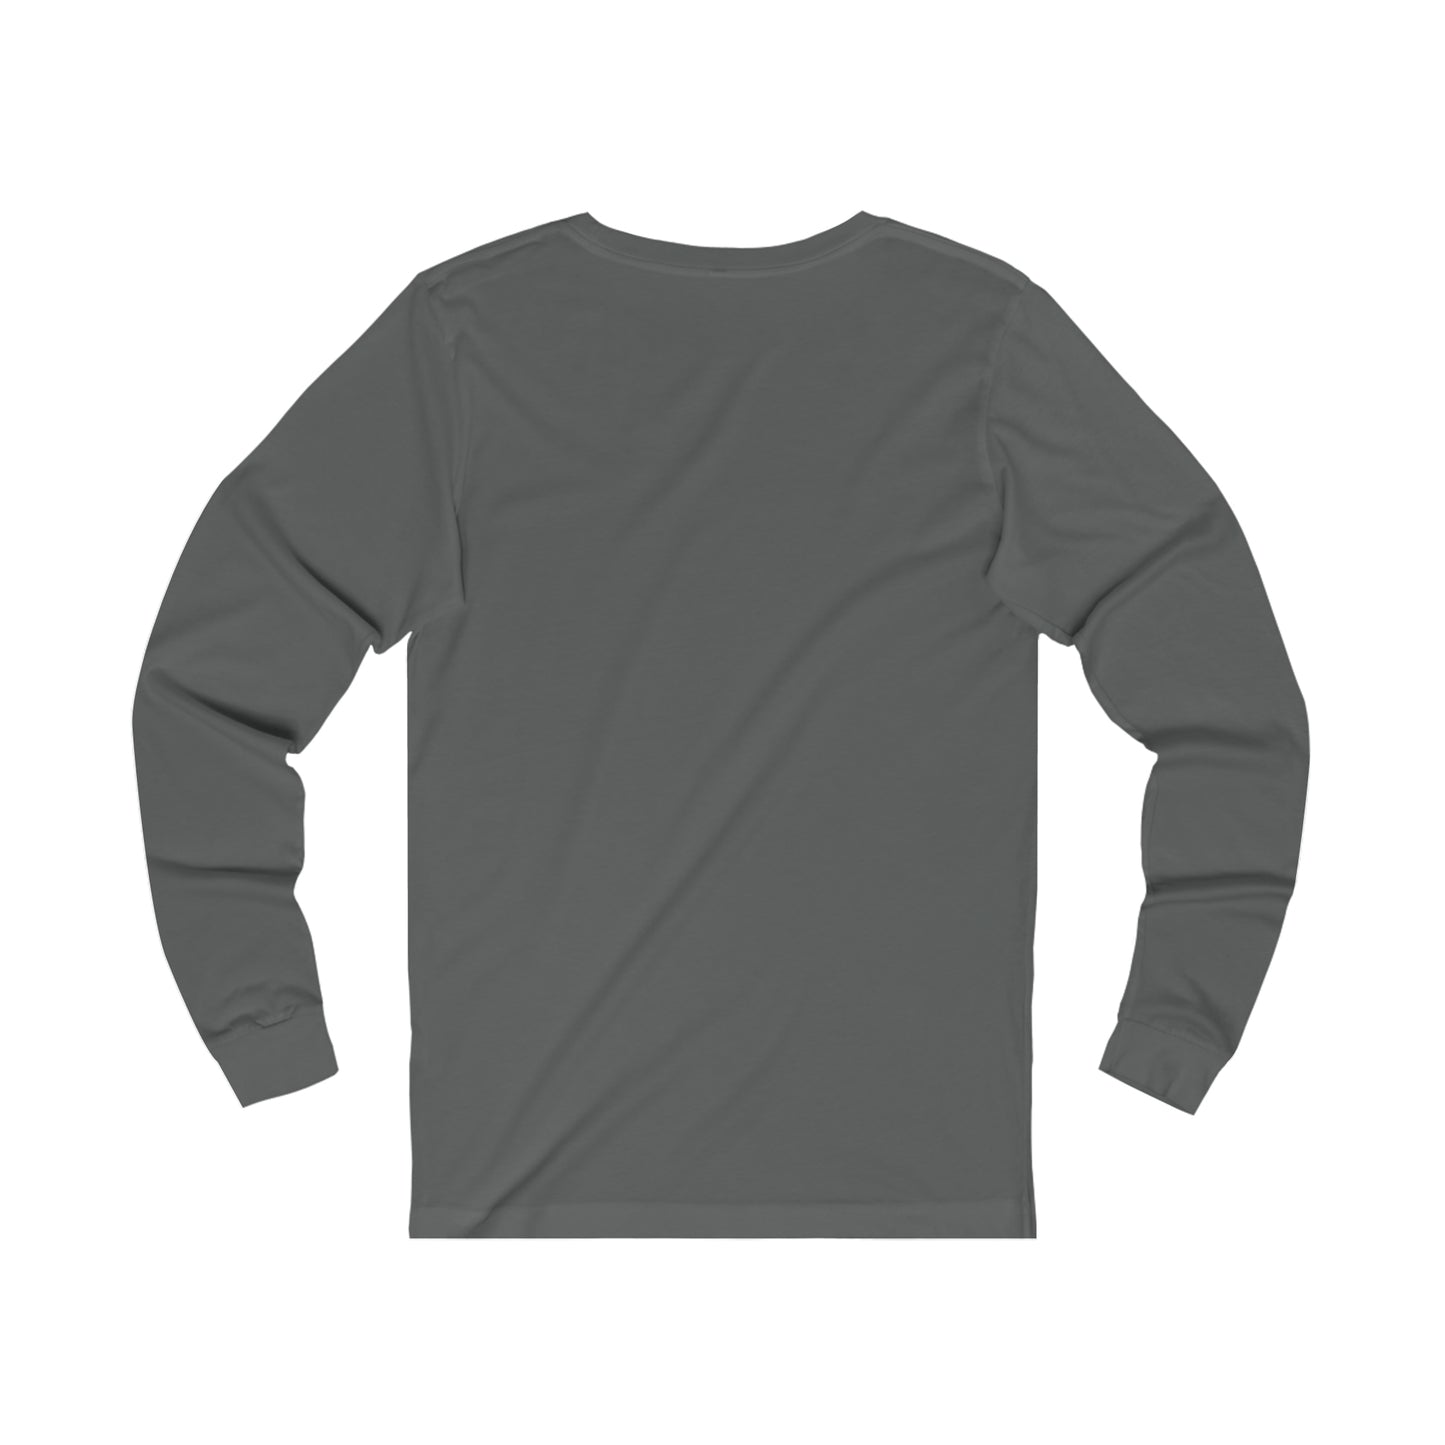 Colourful Football - Unisex Long Sleeve T-Shirt